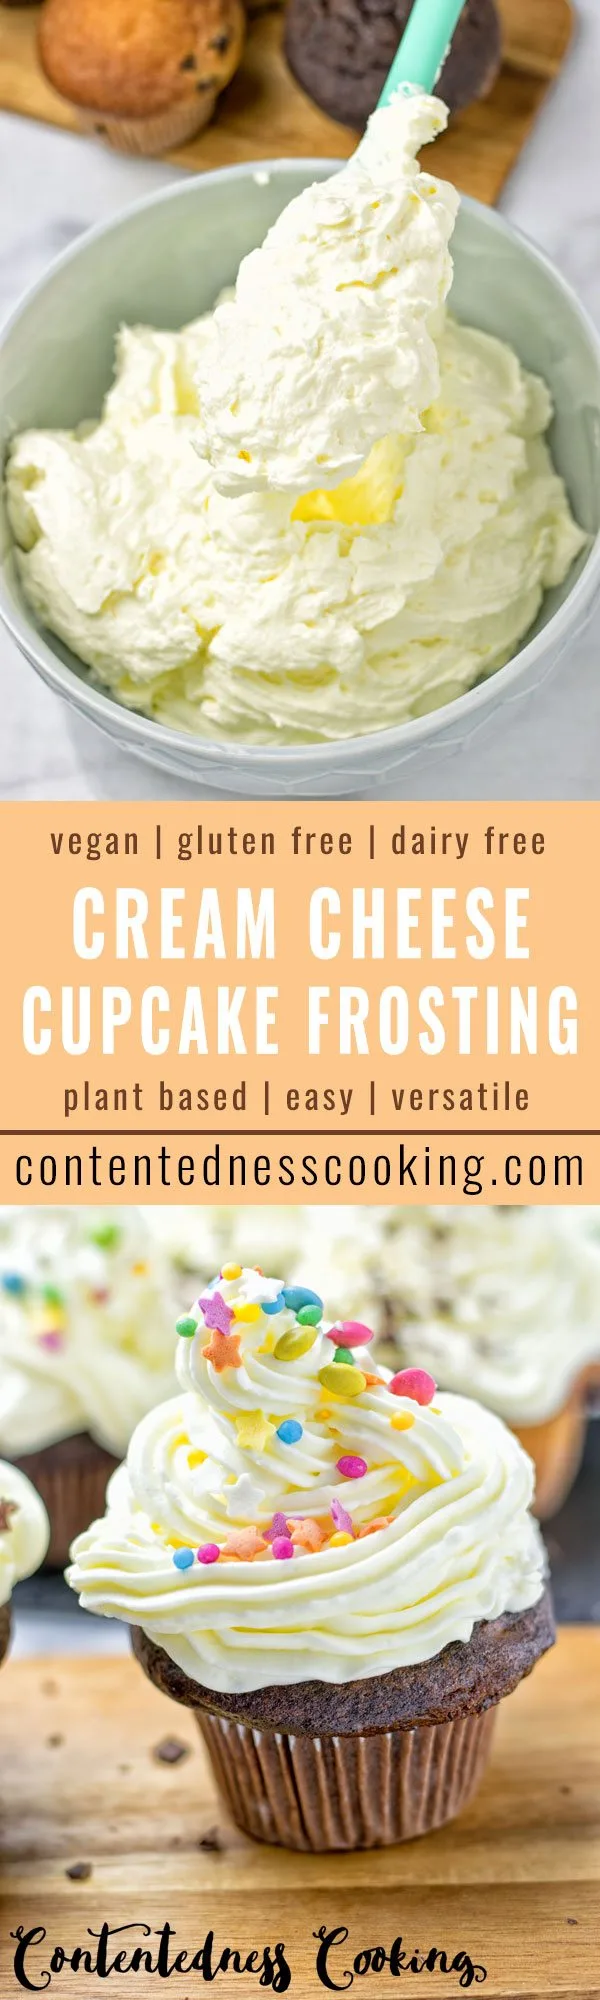 Vegan Cream Cheese Cupcake Frosting | #vegan #glutenfree #contentednesscooking #frosting